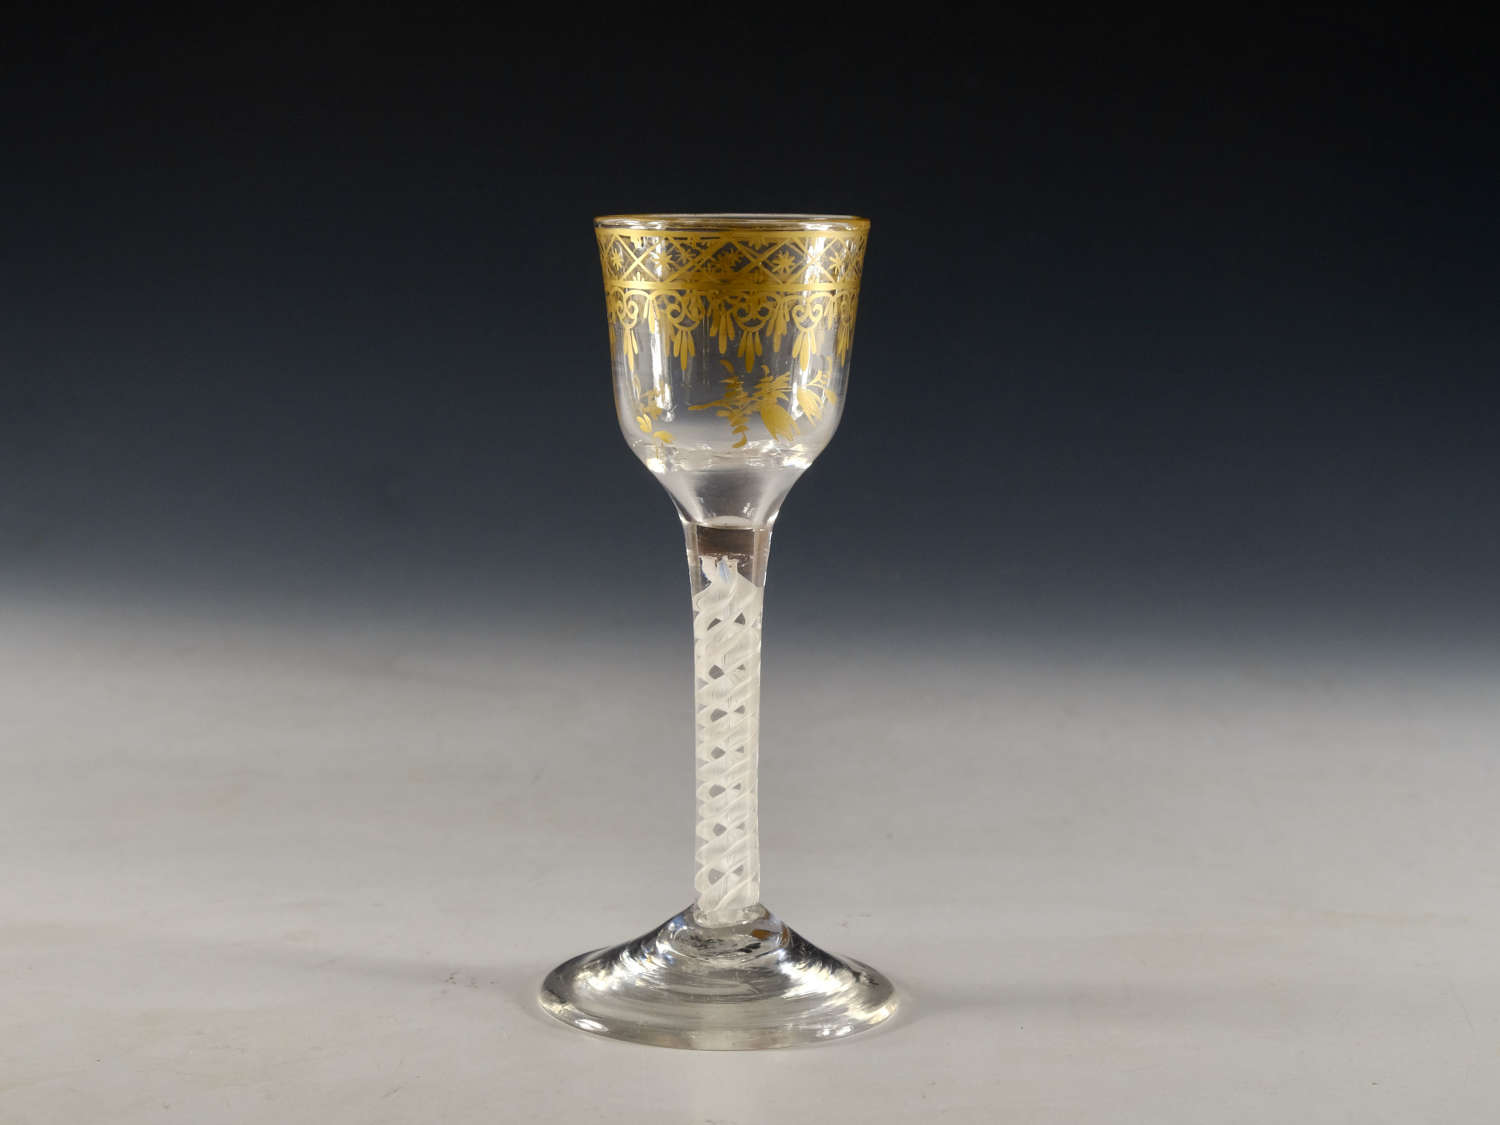 Antique glass wine glass James Giles English c1765